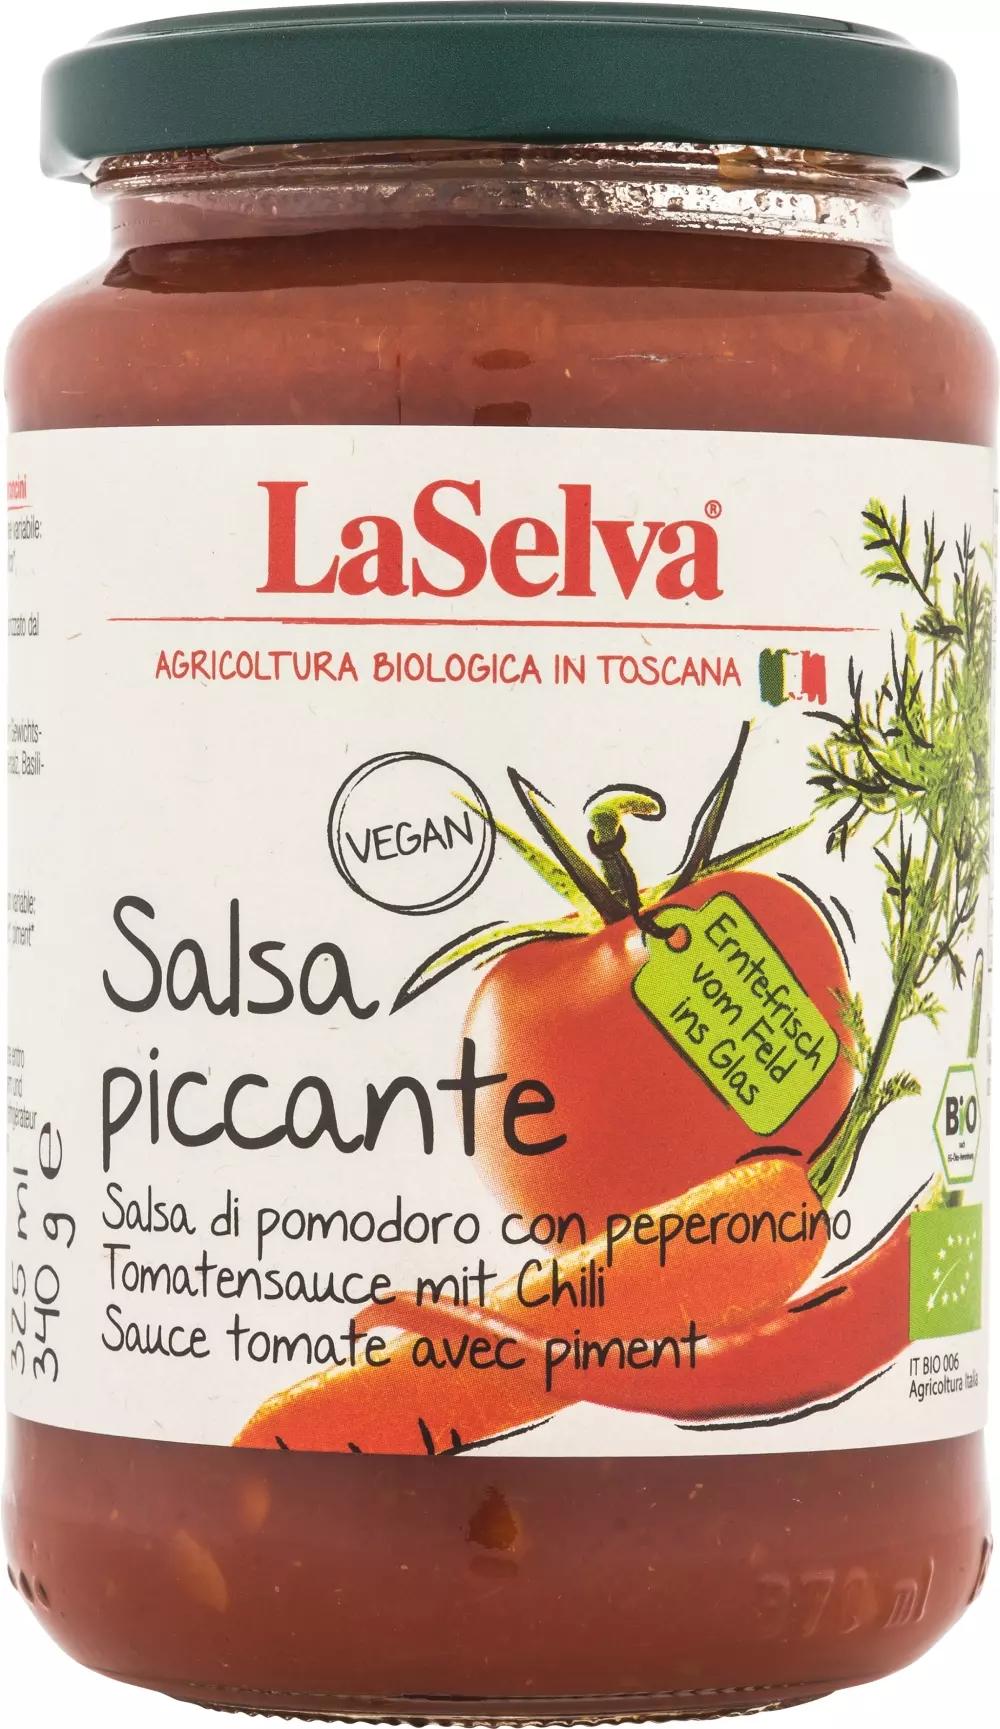 Salsa piccante 340g. Øko - La Selva, 8053323640226, 8018759000907, Pastasaus, klar til bruk, La Selva Bio, 110092, Pastasaus med chili 340g. Øko - La Selva